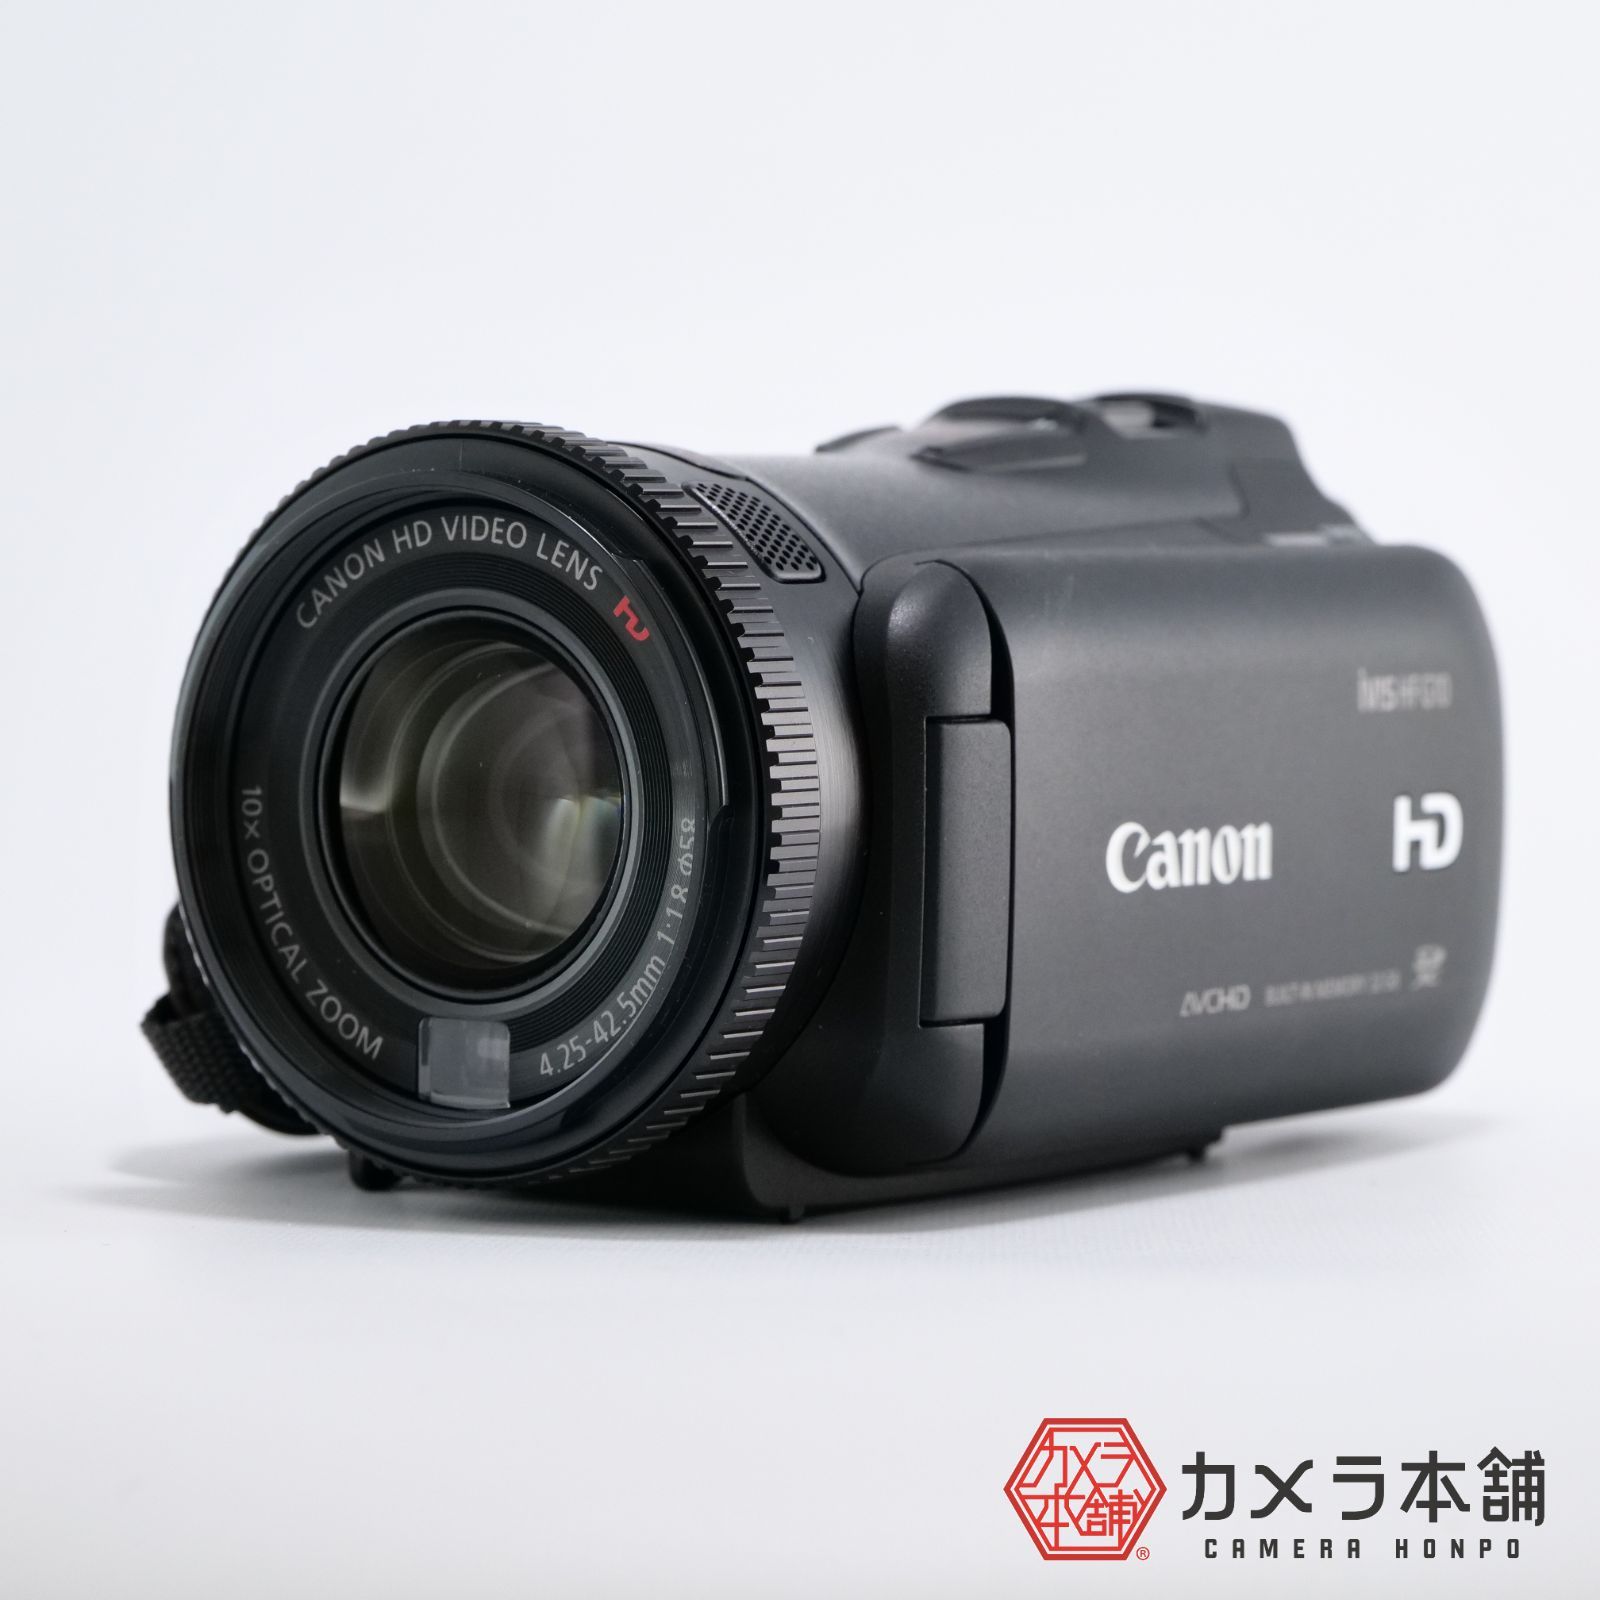 Canon デジタルビデオカメラ iVIS HF G10 光学10倍